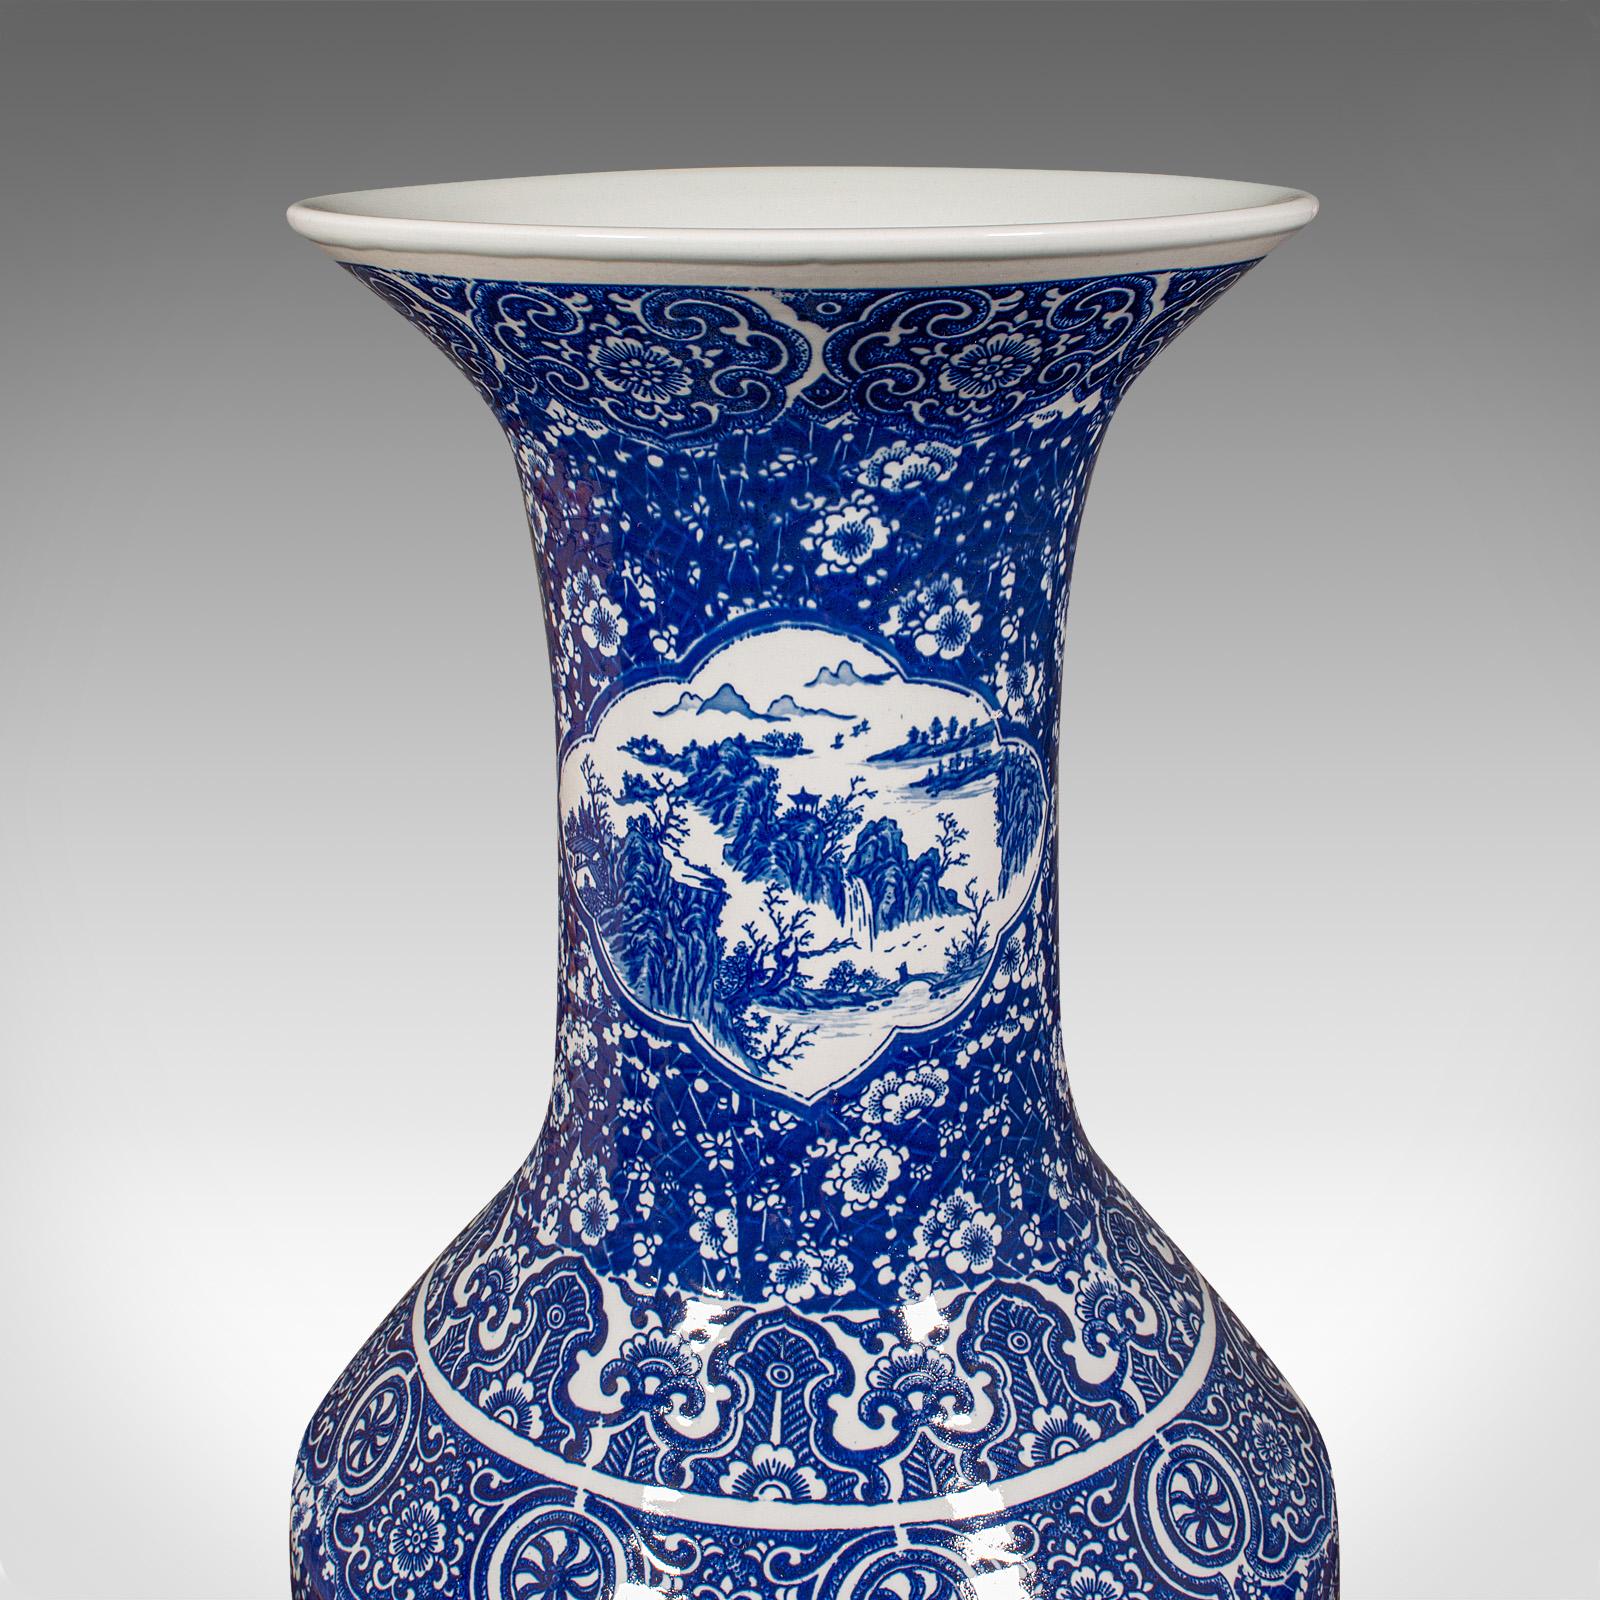 4' Tall Vintage Floor Vase, Chinese, Blue & White, Ceramic, Display, Art Deco For Sale 3